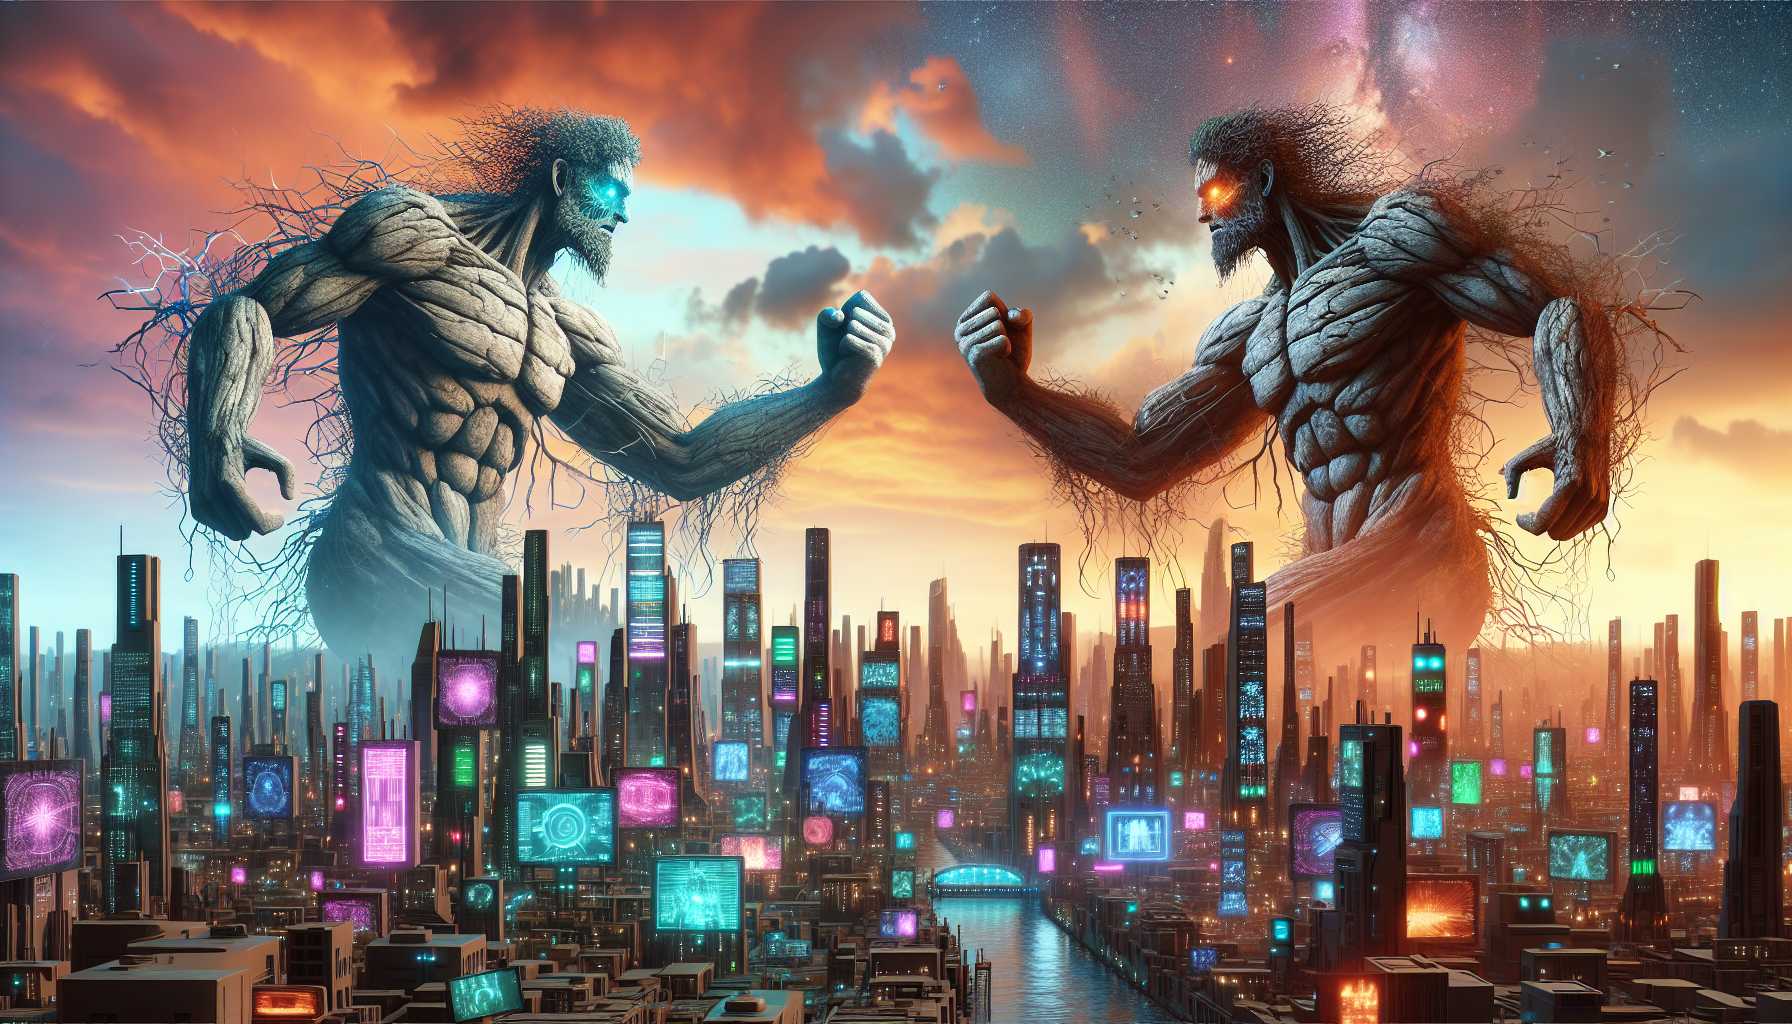 conceptual art of Titans clashing over a technological landscape